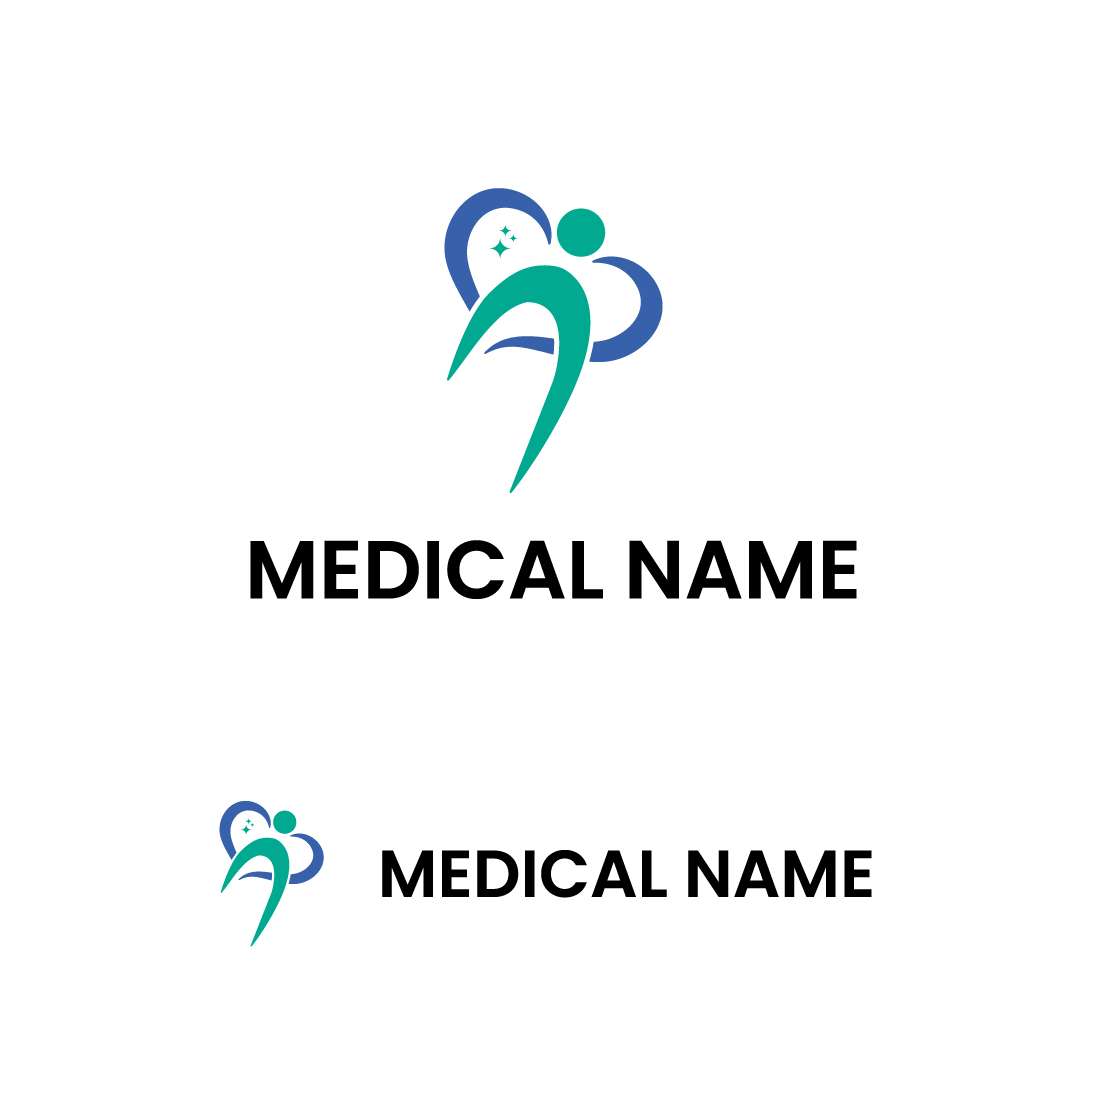 Medical or Hospital Logo Design, Modern style preview image.